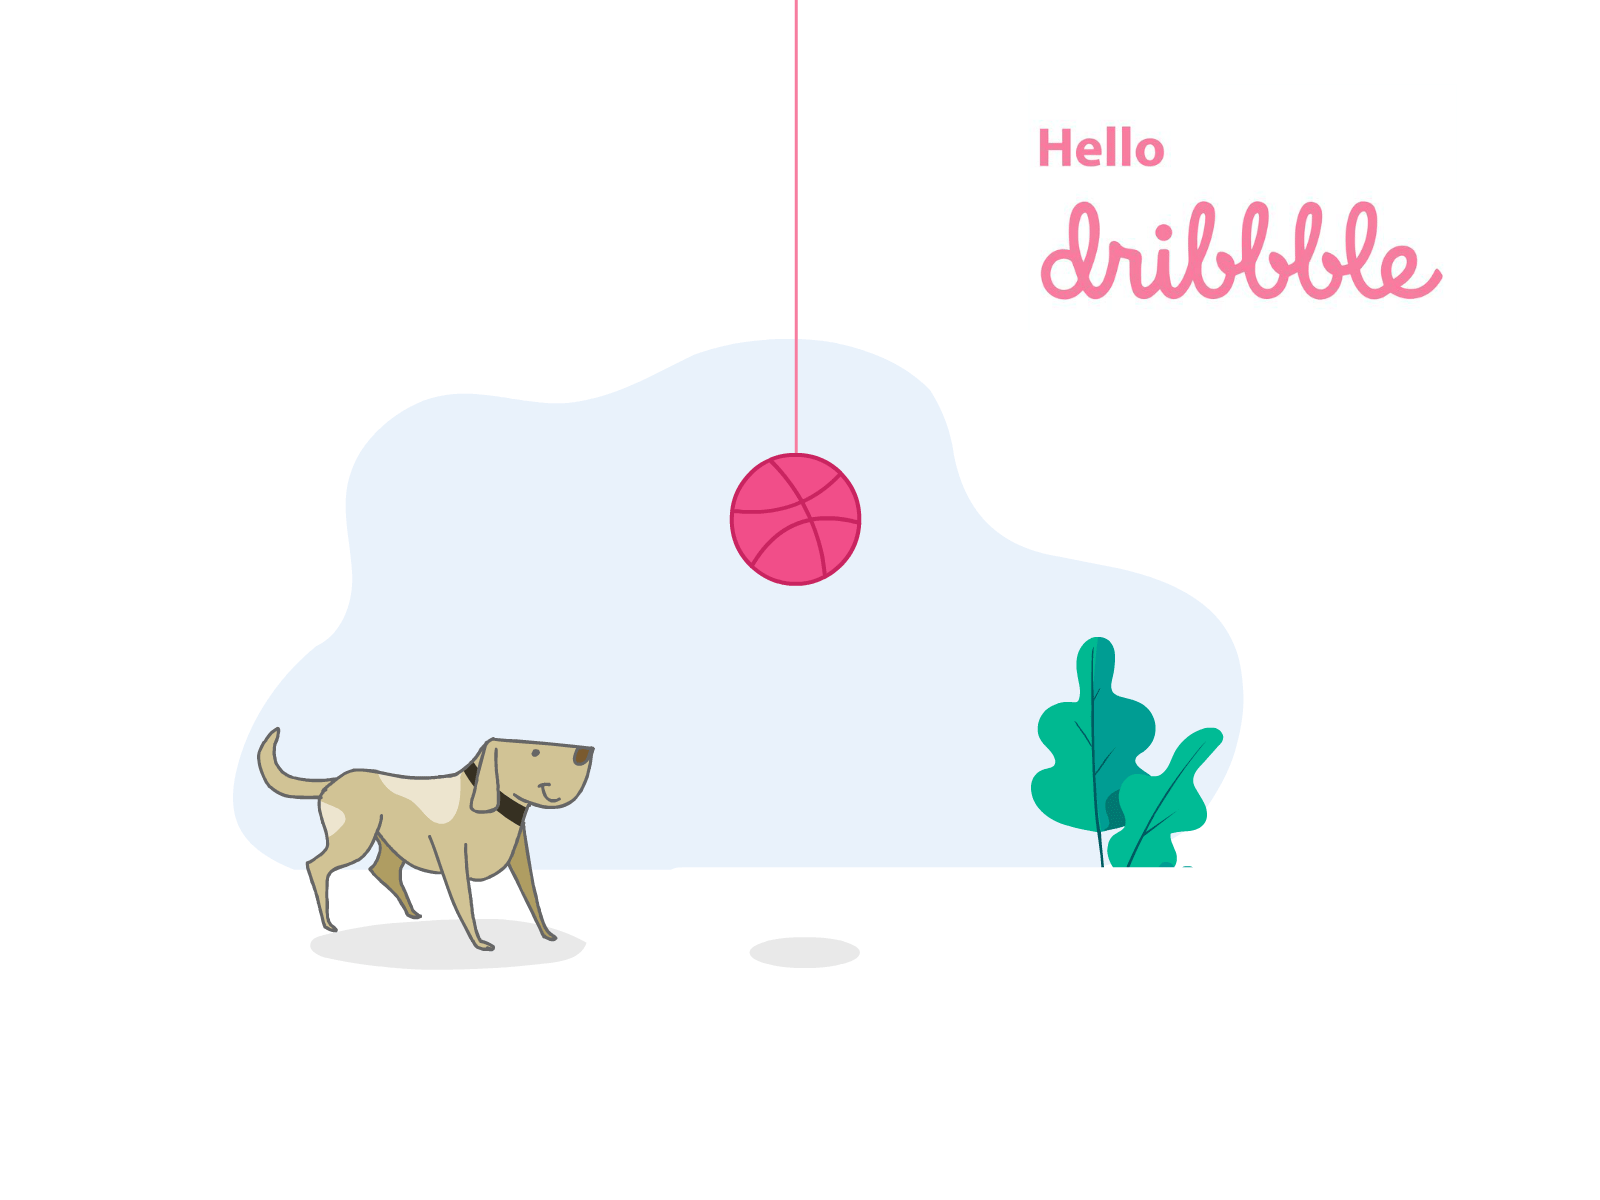 Dribbble First Shot 2danimation animaiton art artist dog illustration hello dribbble illustration invite welcome dribbble